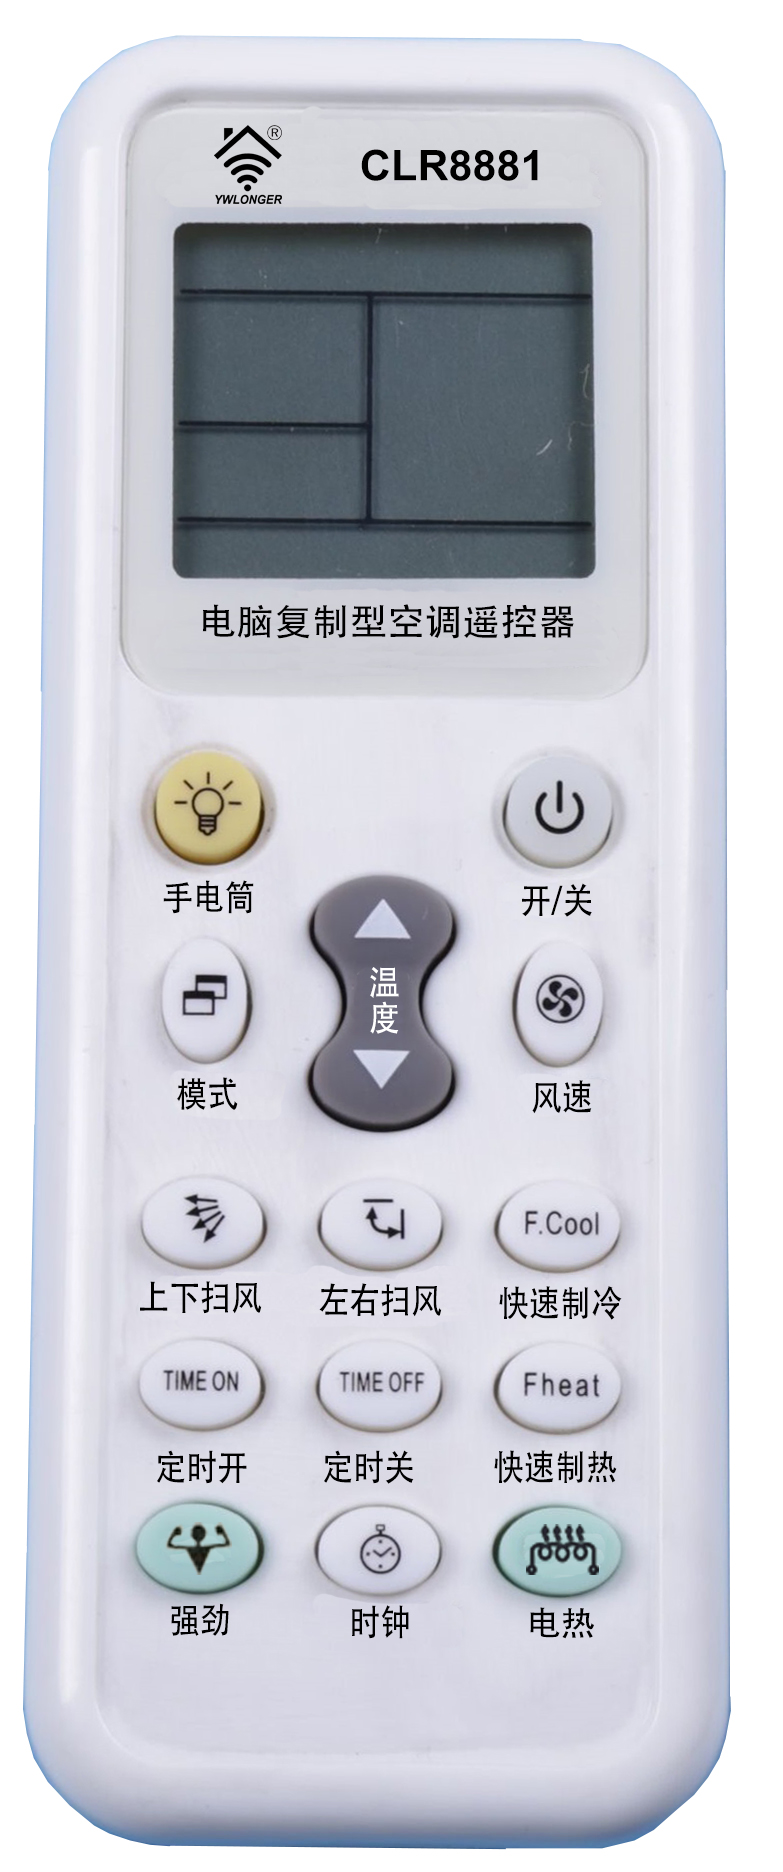 CLR8881中文版拷贝型空调遥控器